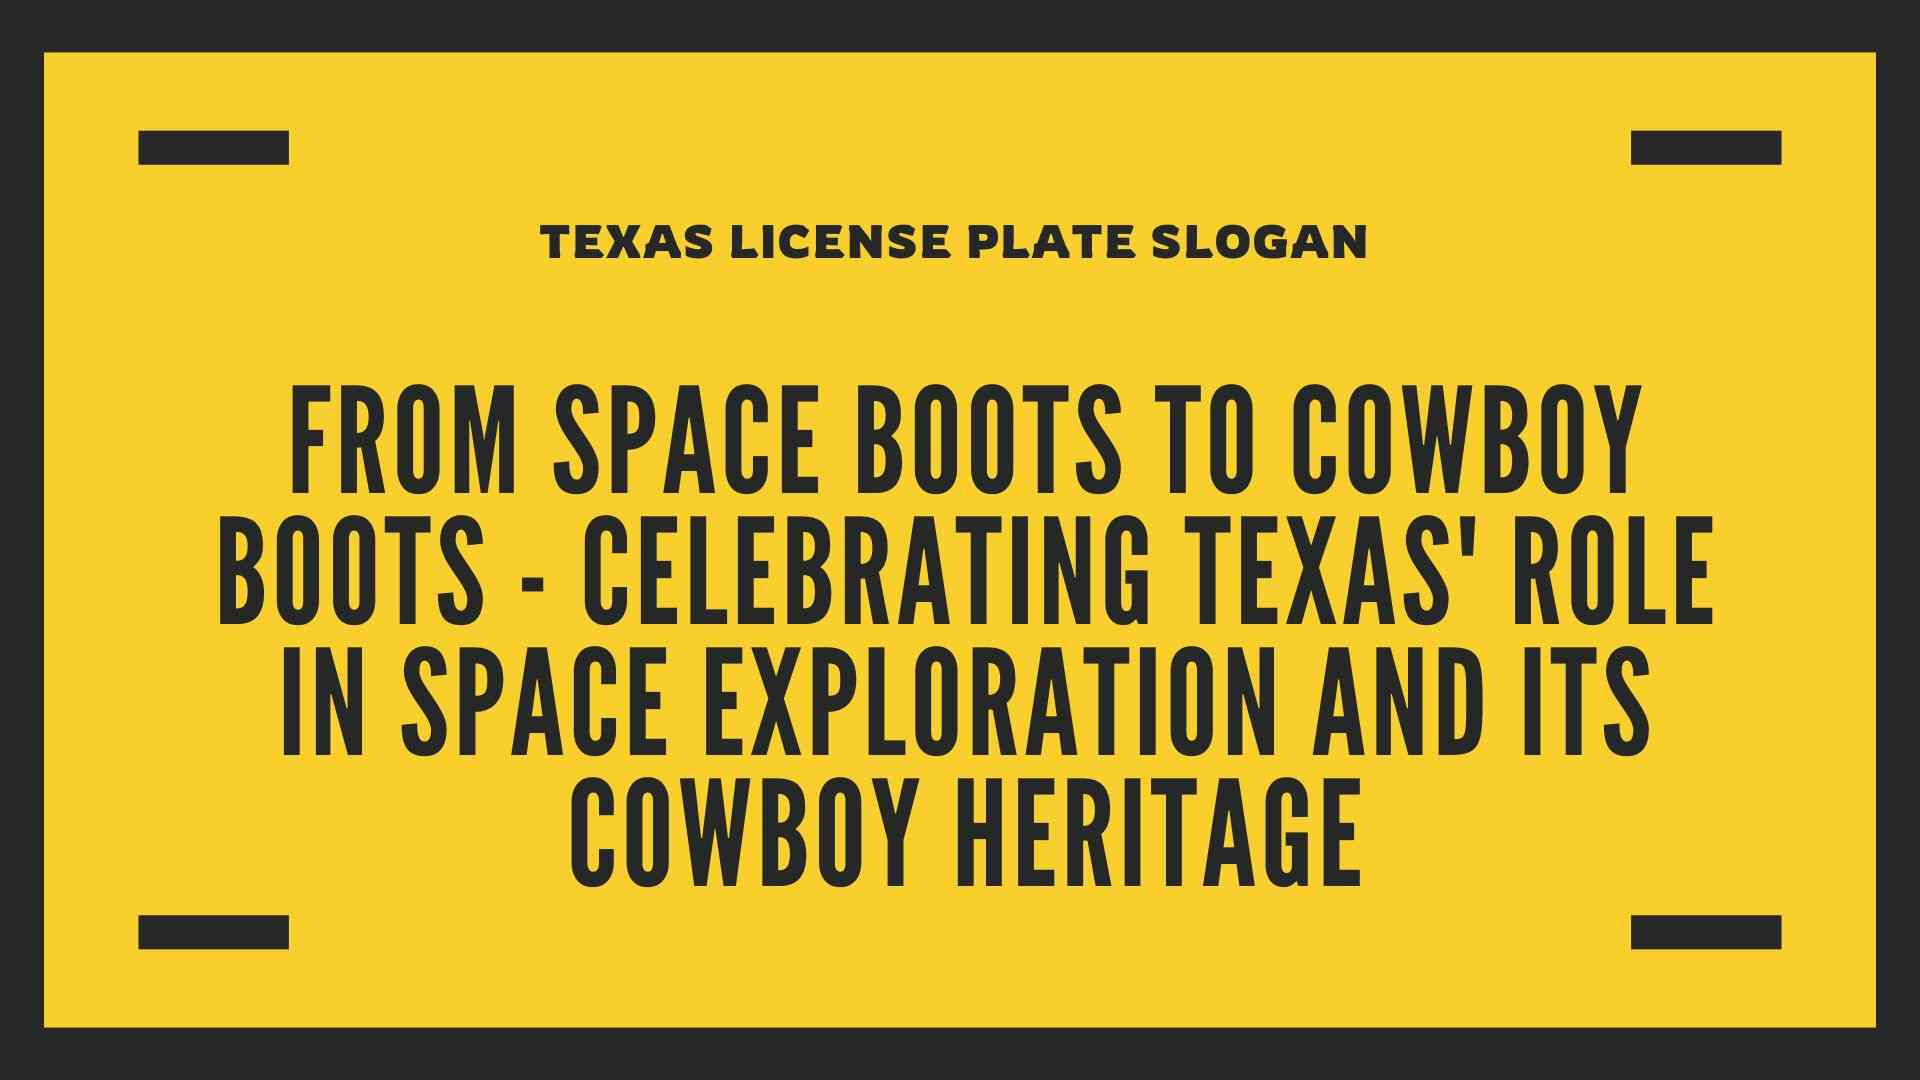 Texas License Plate Slogan